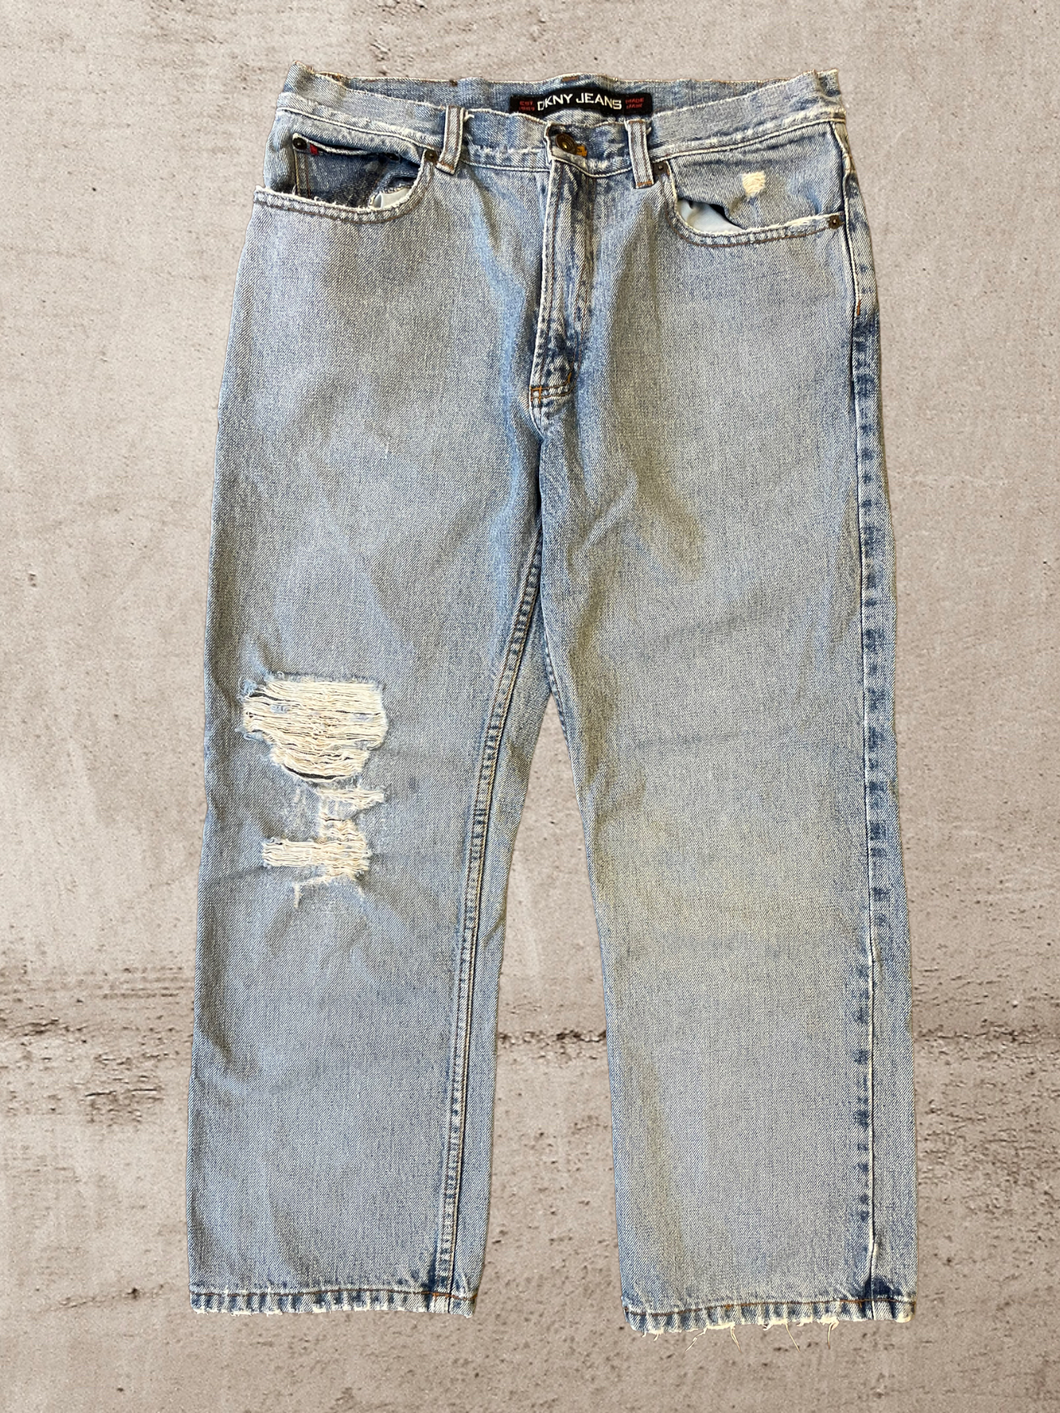 Vintage Dkny Distressed Jeans - 32x24